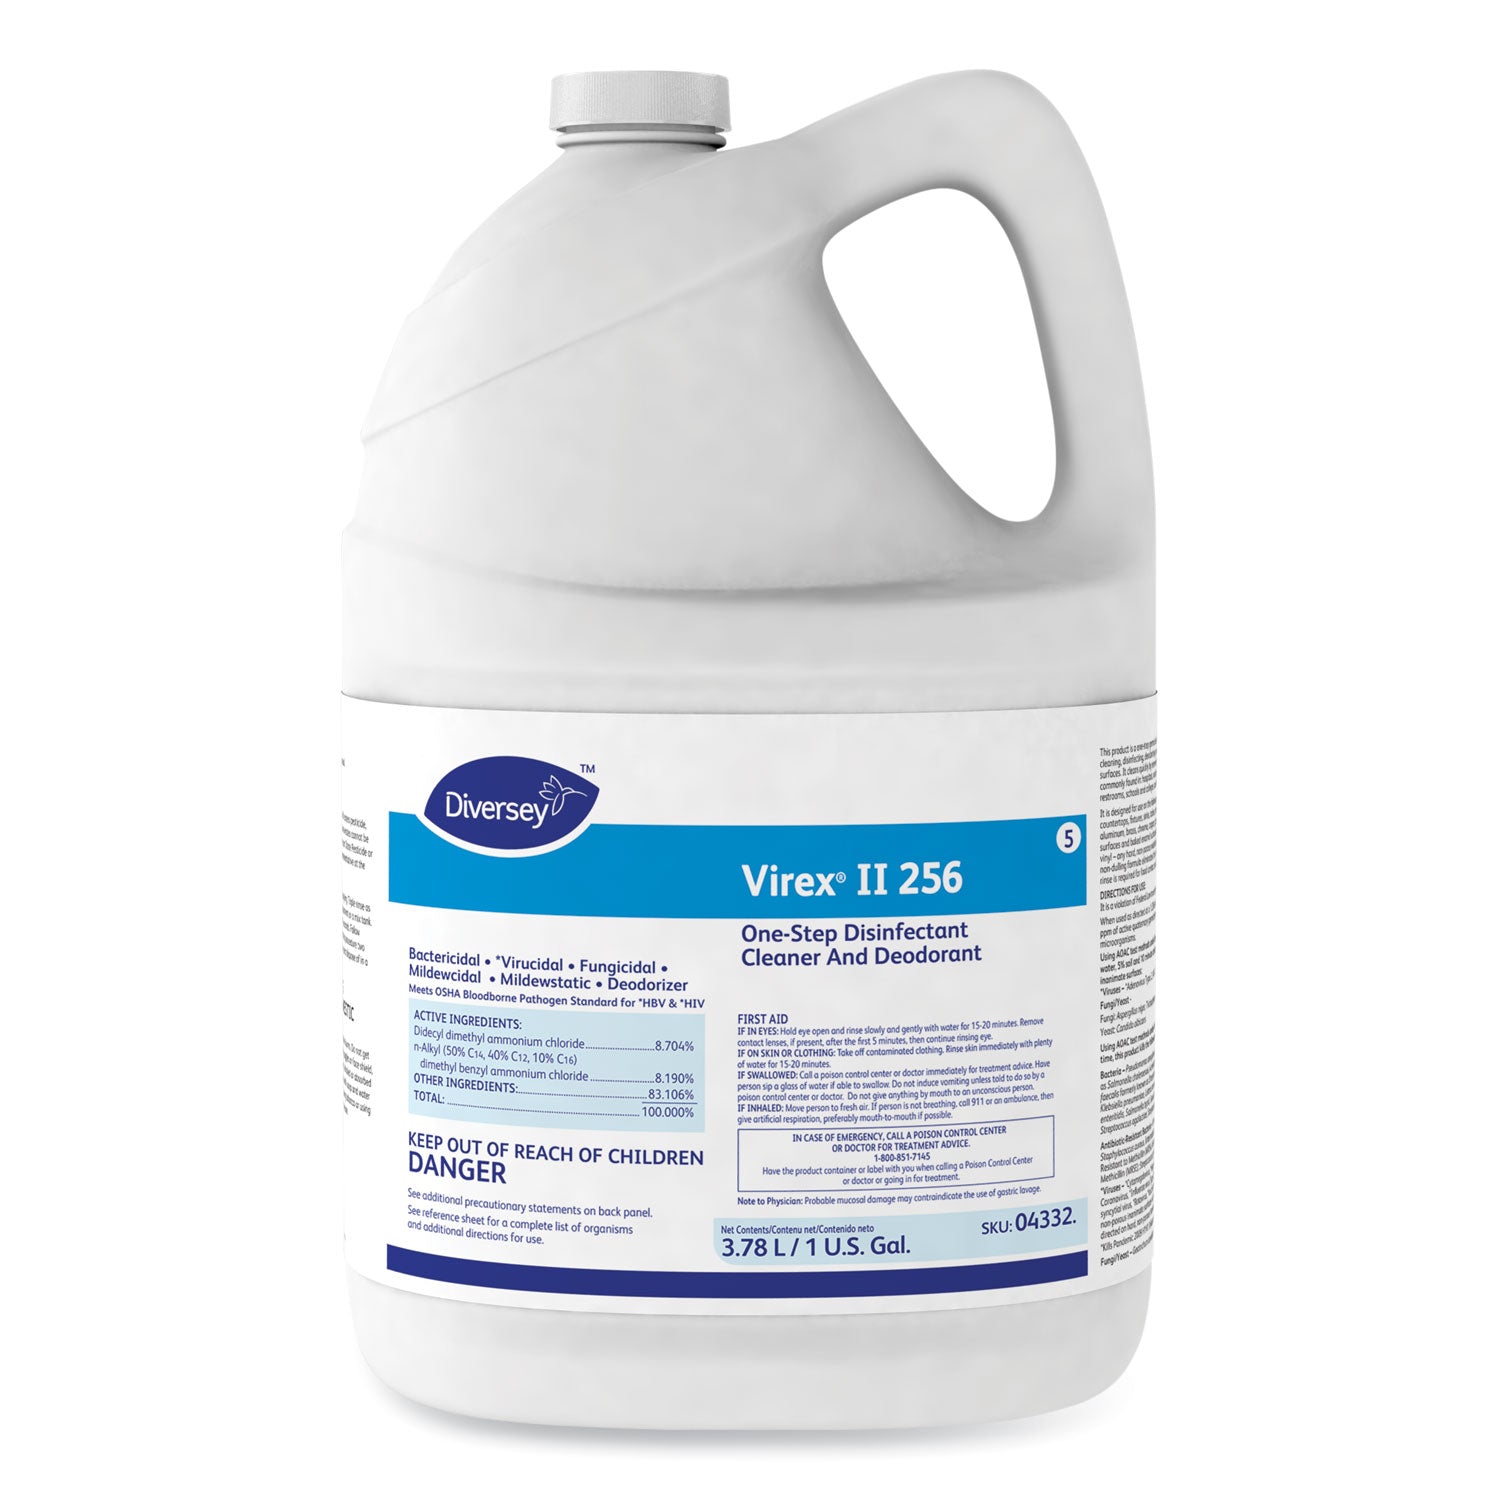 virex-ii-256-one-step-disinfectant-cleaner-deodorant-mint-1-gal-4-bottles-ct_dvo04332 - 1